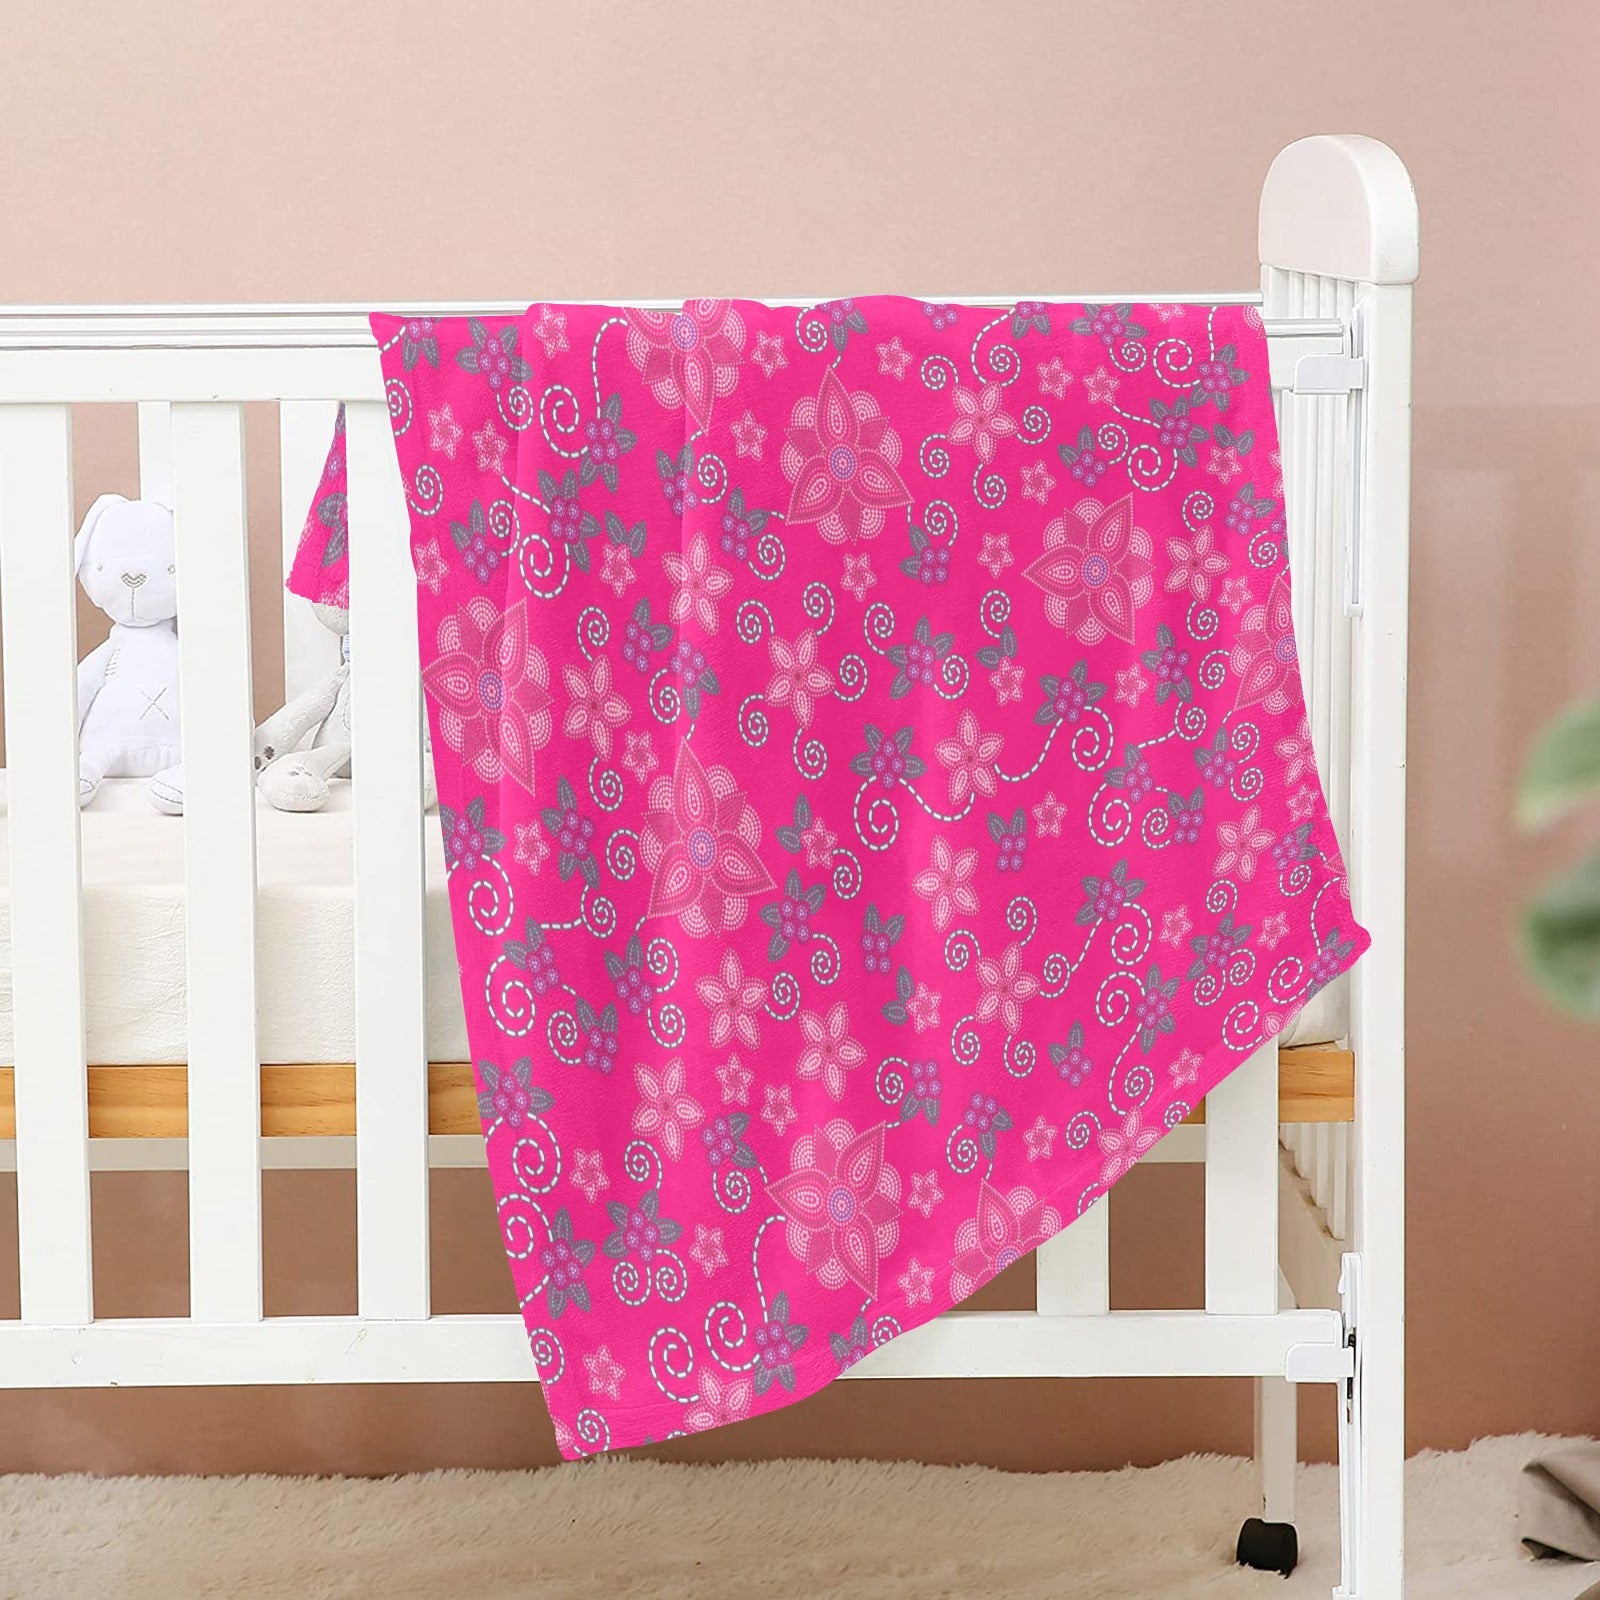 Berry Picking Pink Baby Blanket 30"x40" Baby Blanket 30"x40" e-joyer 